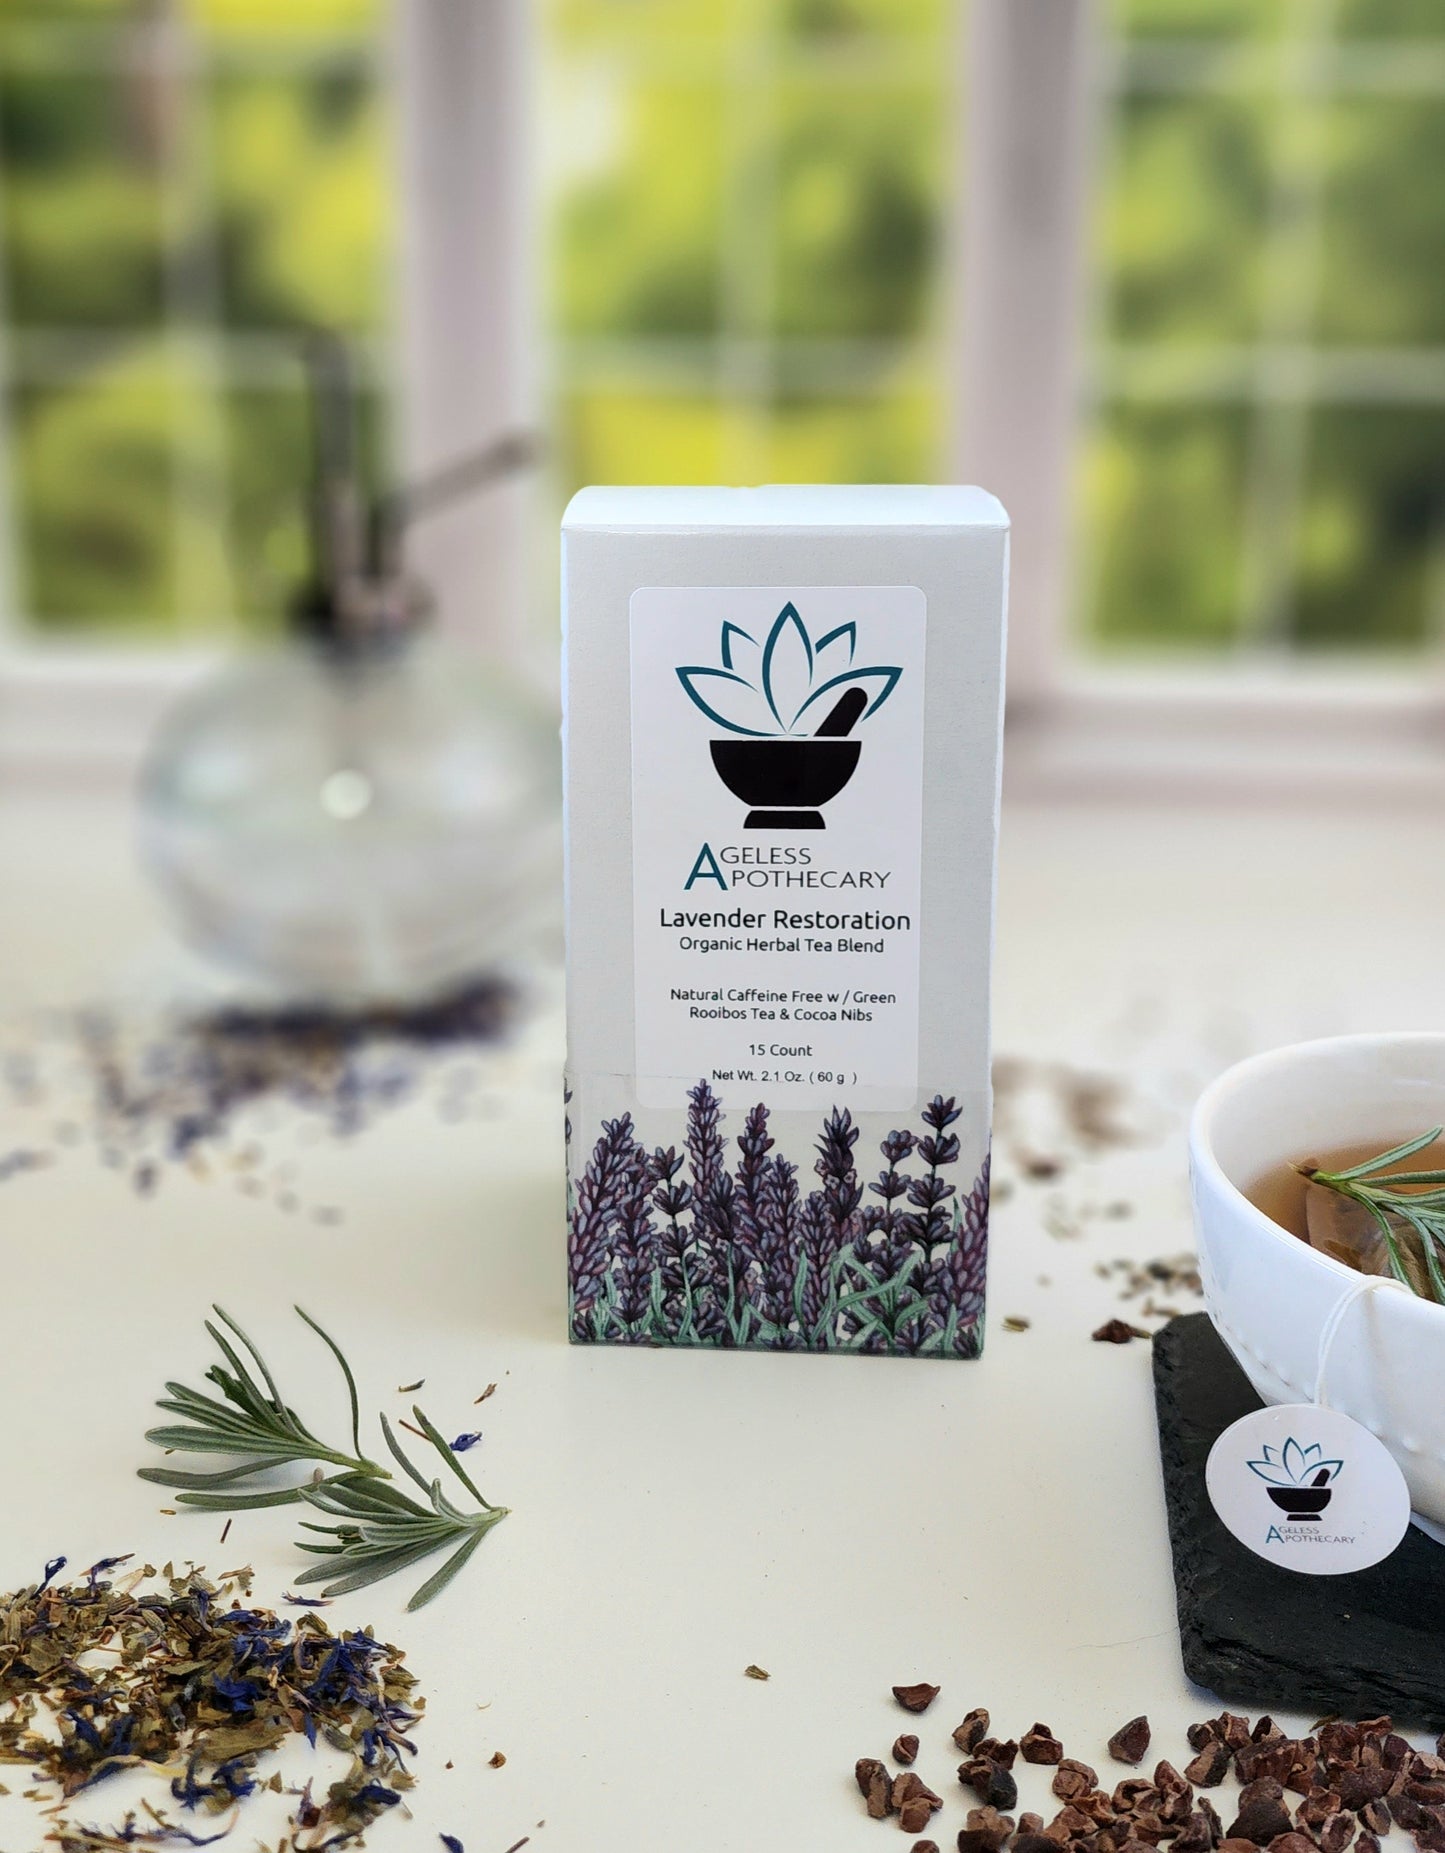 Lavender Restoration - Caffeine Free Organic Herbal Tea Blend with Green Rooibos Tea & Cocoa Nibs